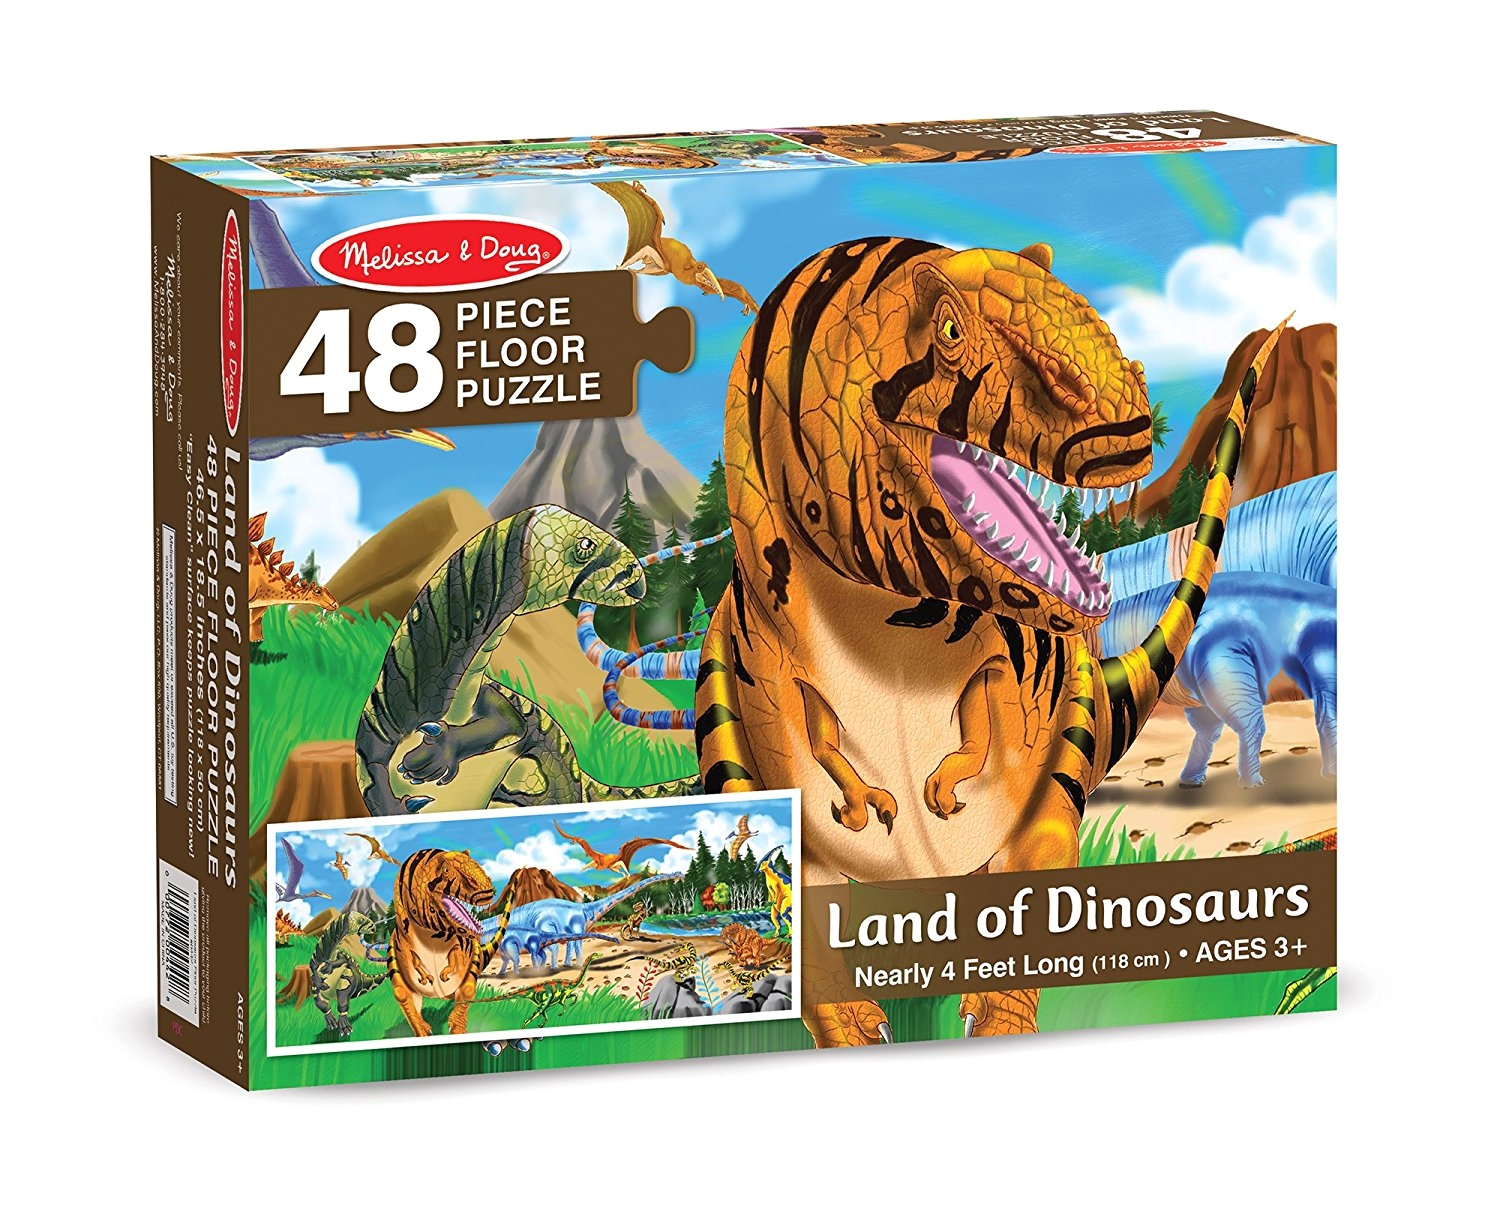 amazon com melissa doug land of dinosaurs floor puzzle 48 pcs 4 feet long melissa doug toys games